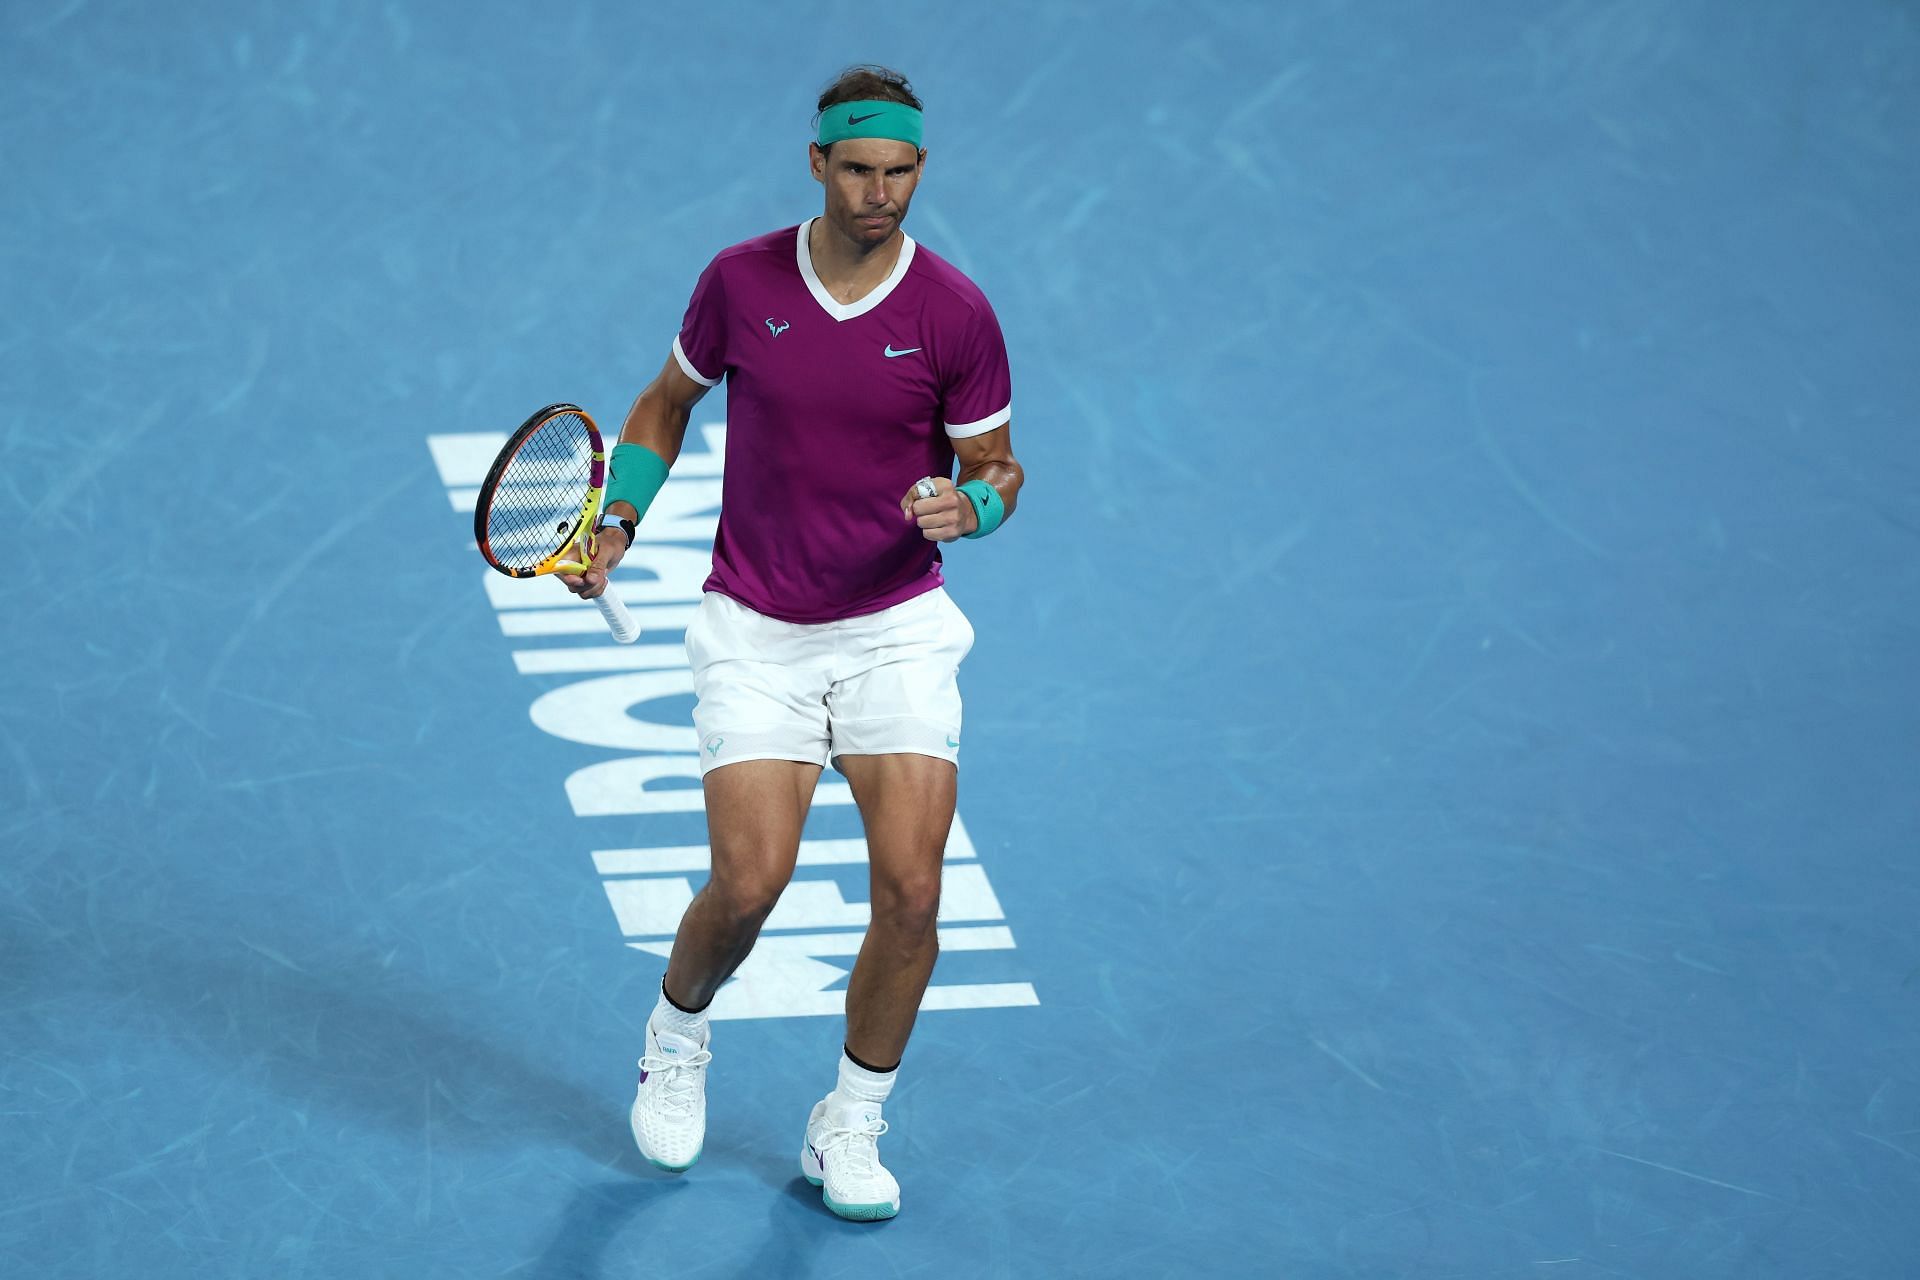 Rafael Nadal beat Matteo Berrettini in four sets to reach the 2022 Australian Open final